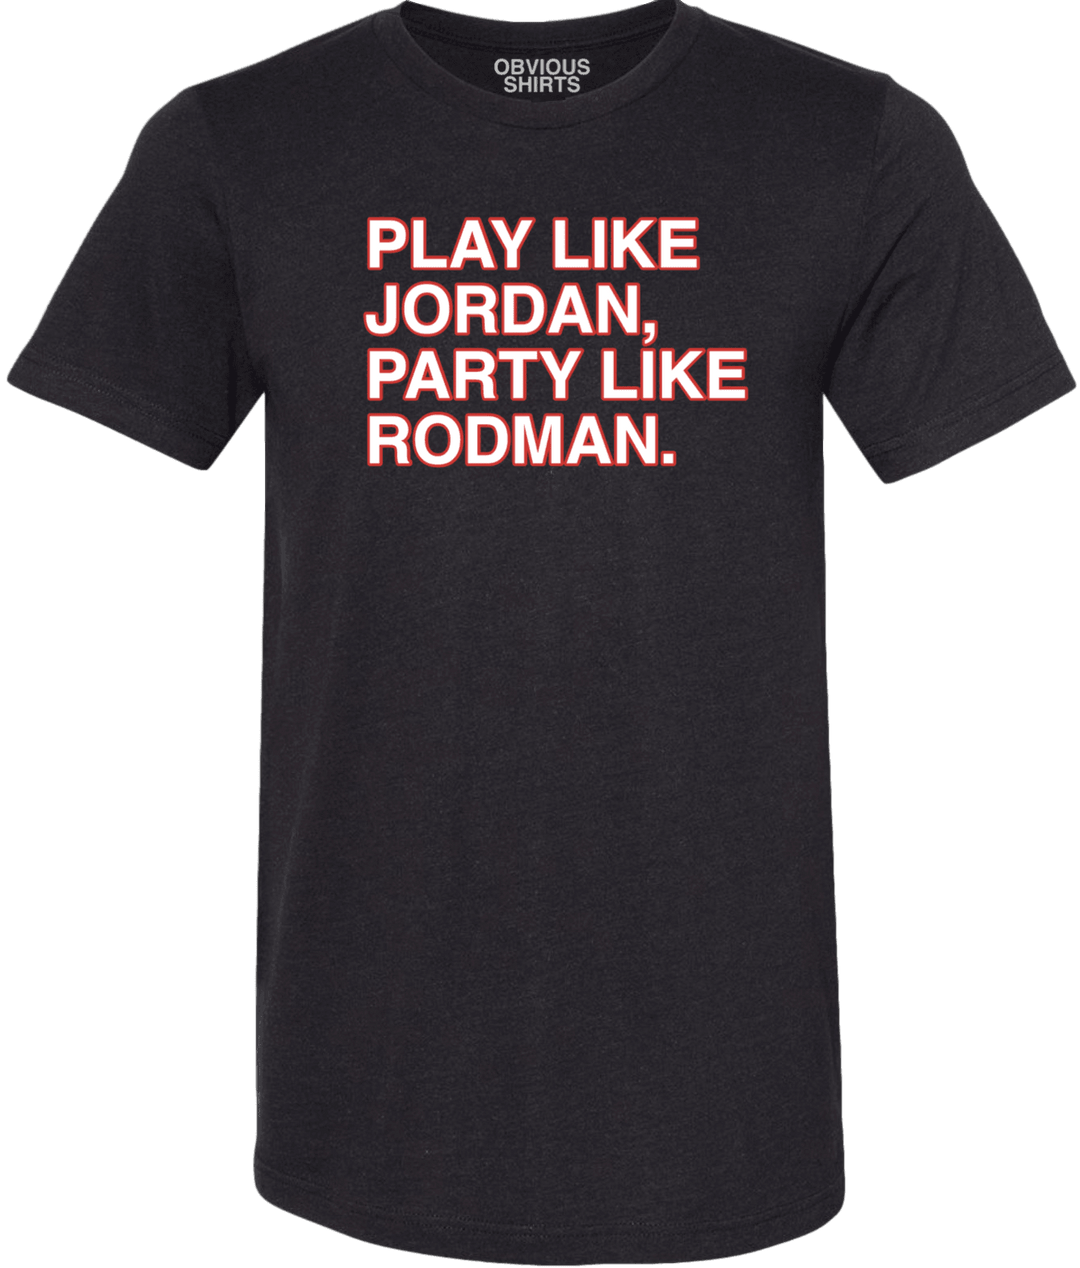 PLAY LIKE JORDAN, PARTY LIKE RODMAN. - OBVIOUS SHIRTS.